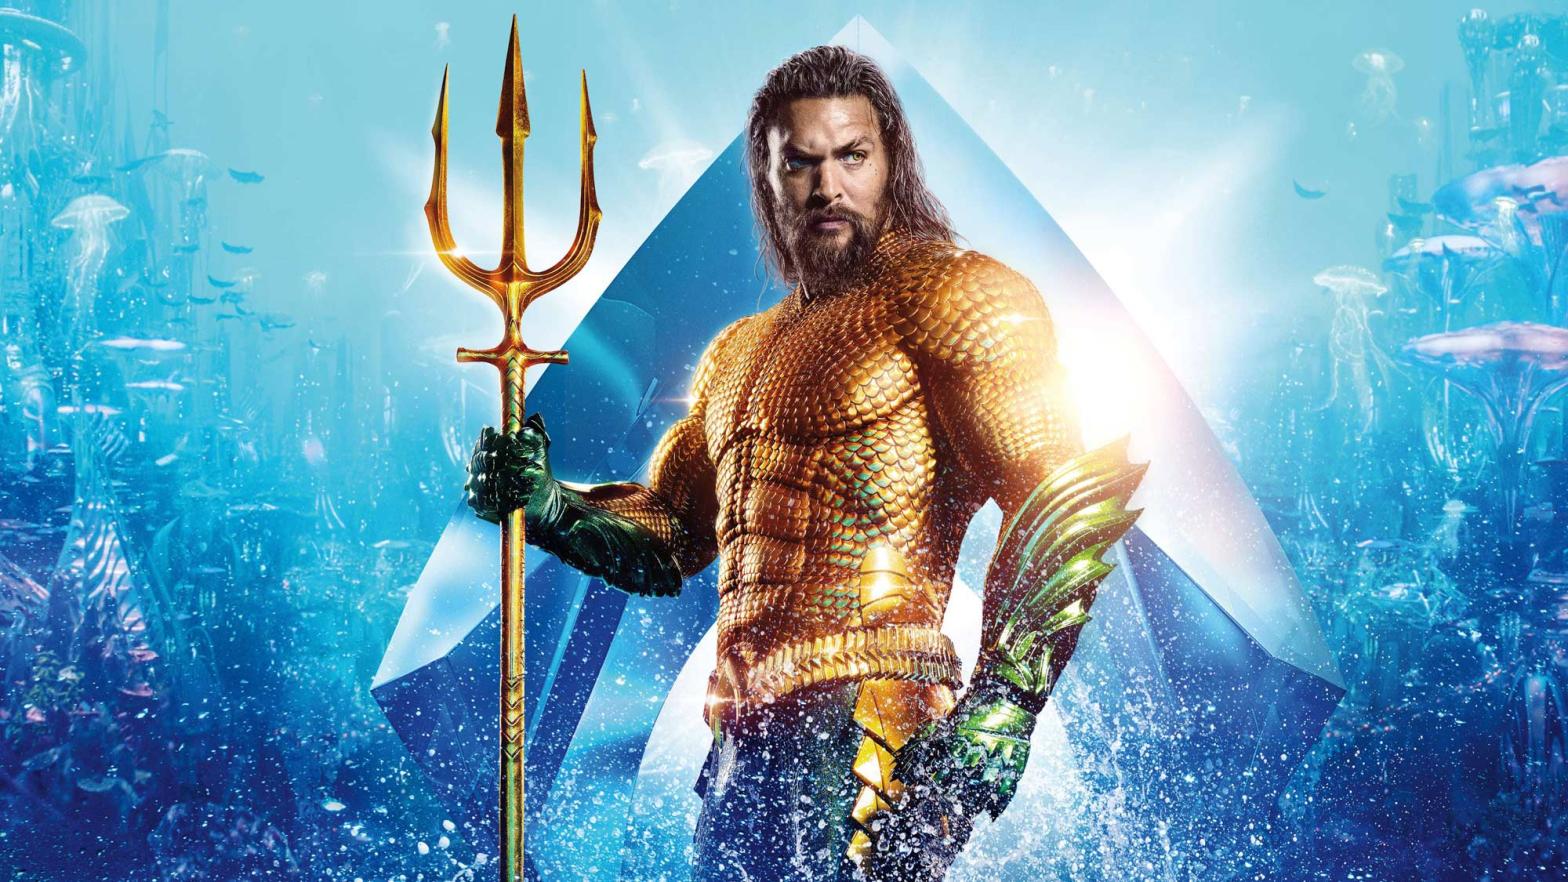 Jason Momoa in all his sparkly Aquaman glory. (Image: Warner Bros.)